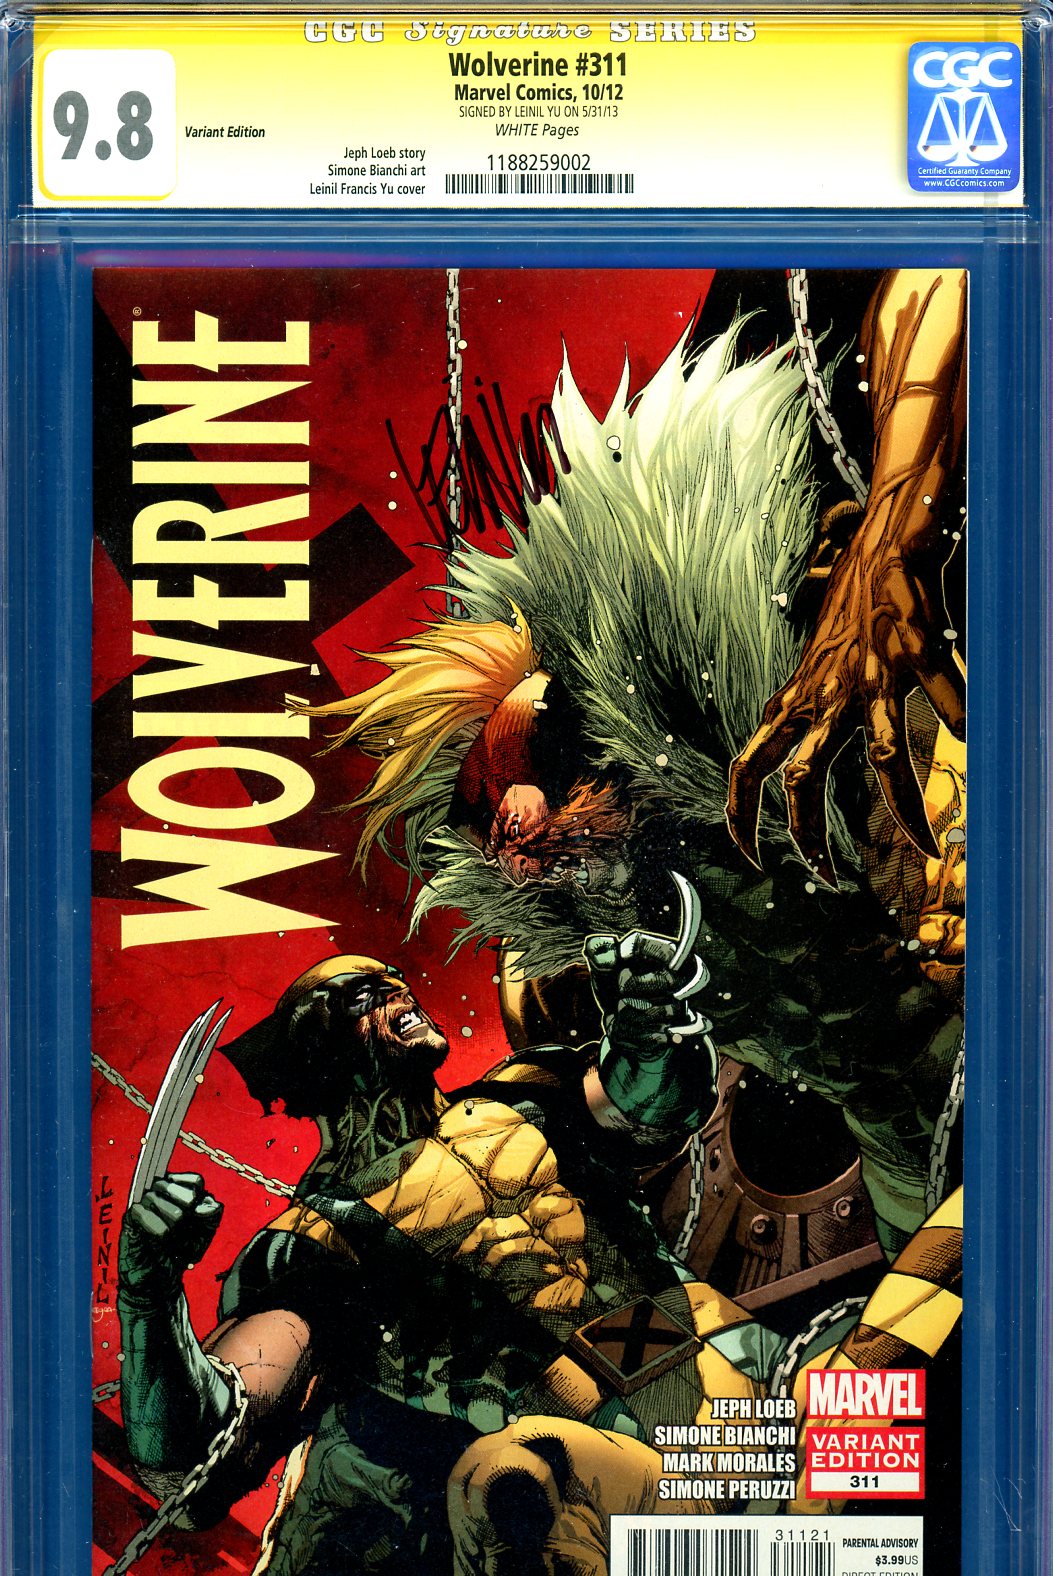 Wolverine #311 CGC 9.8 w Variant Edition